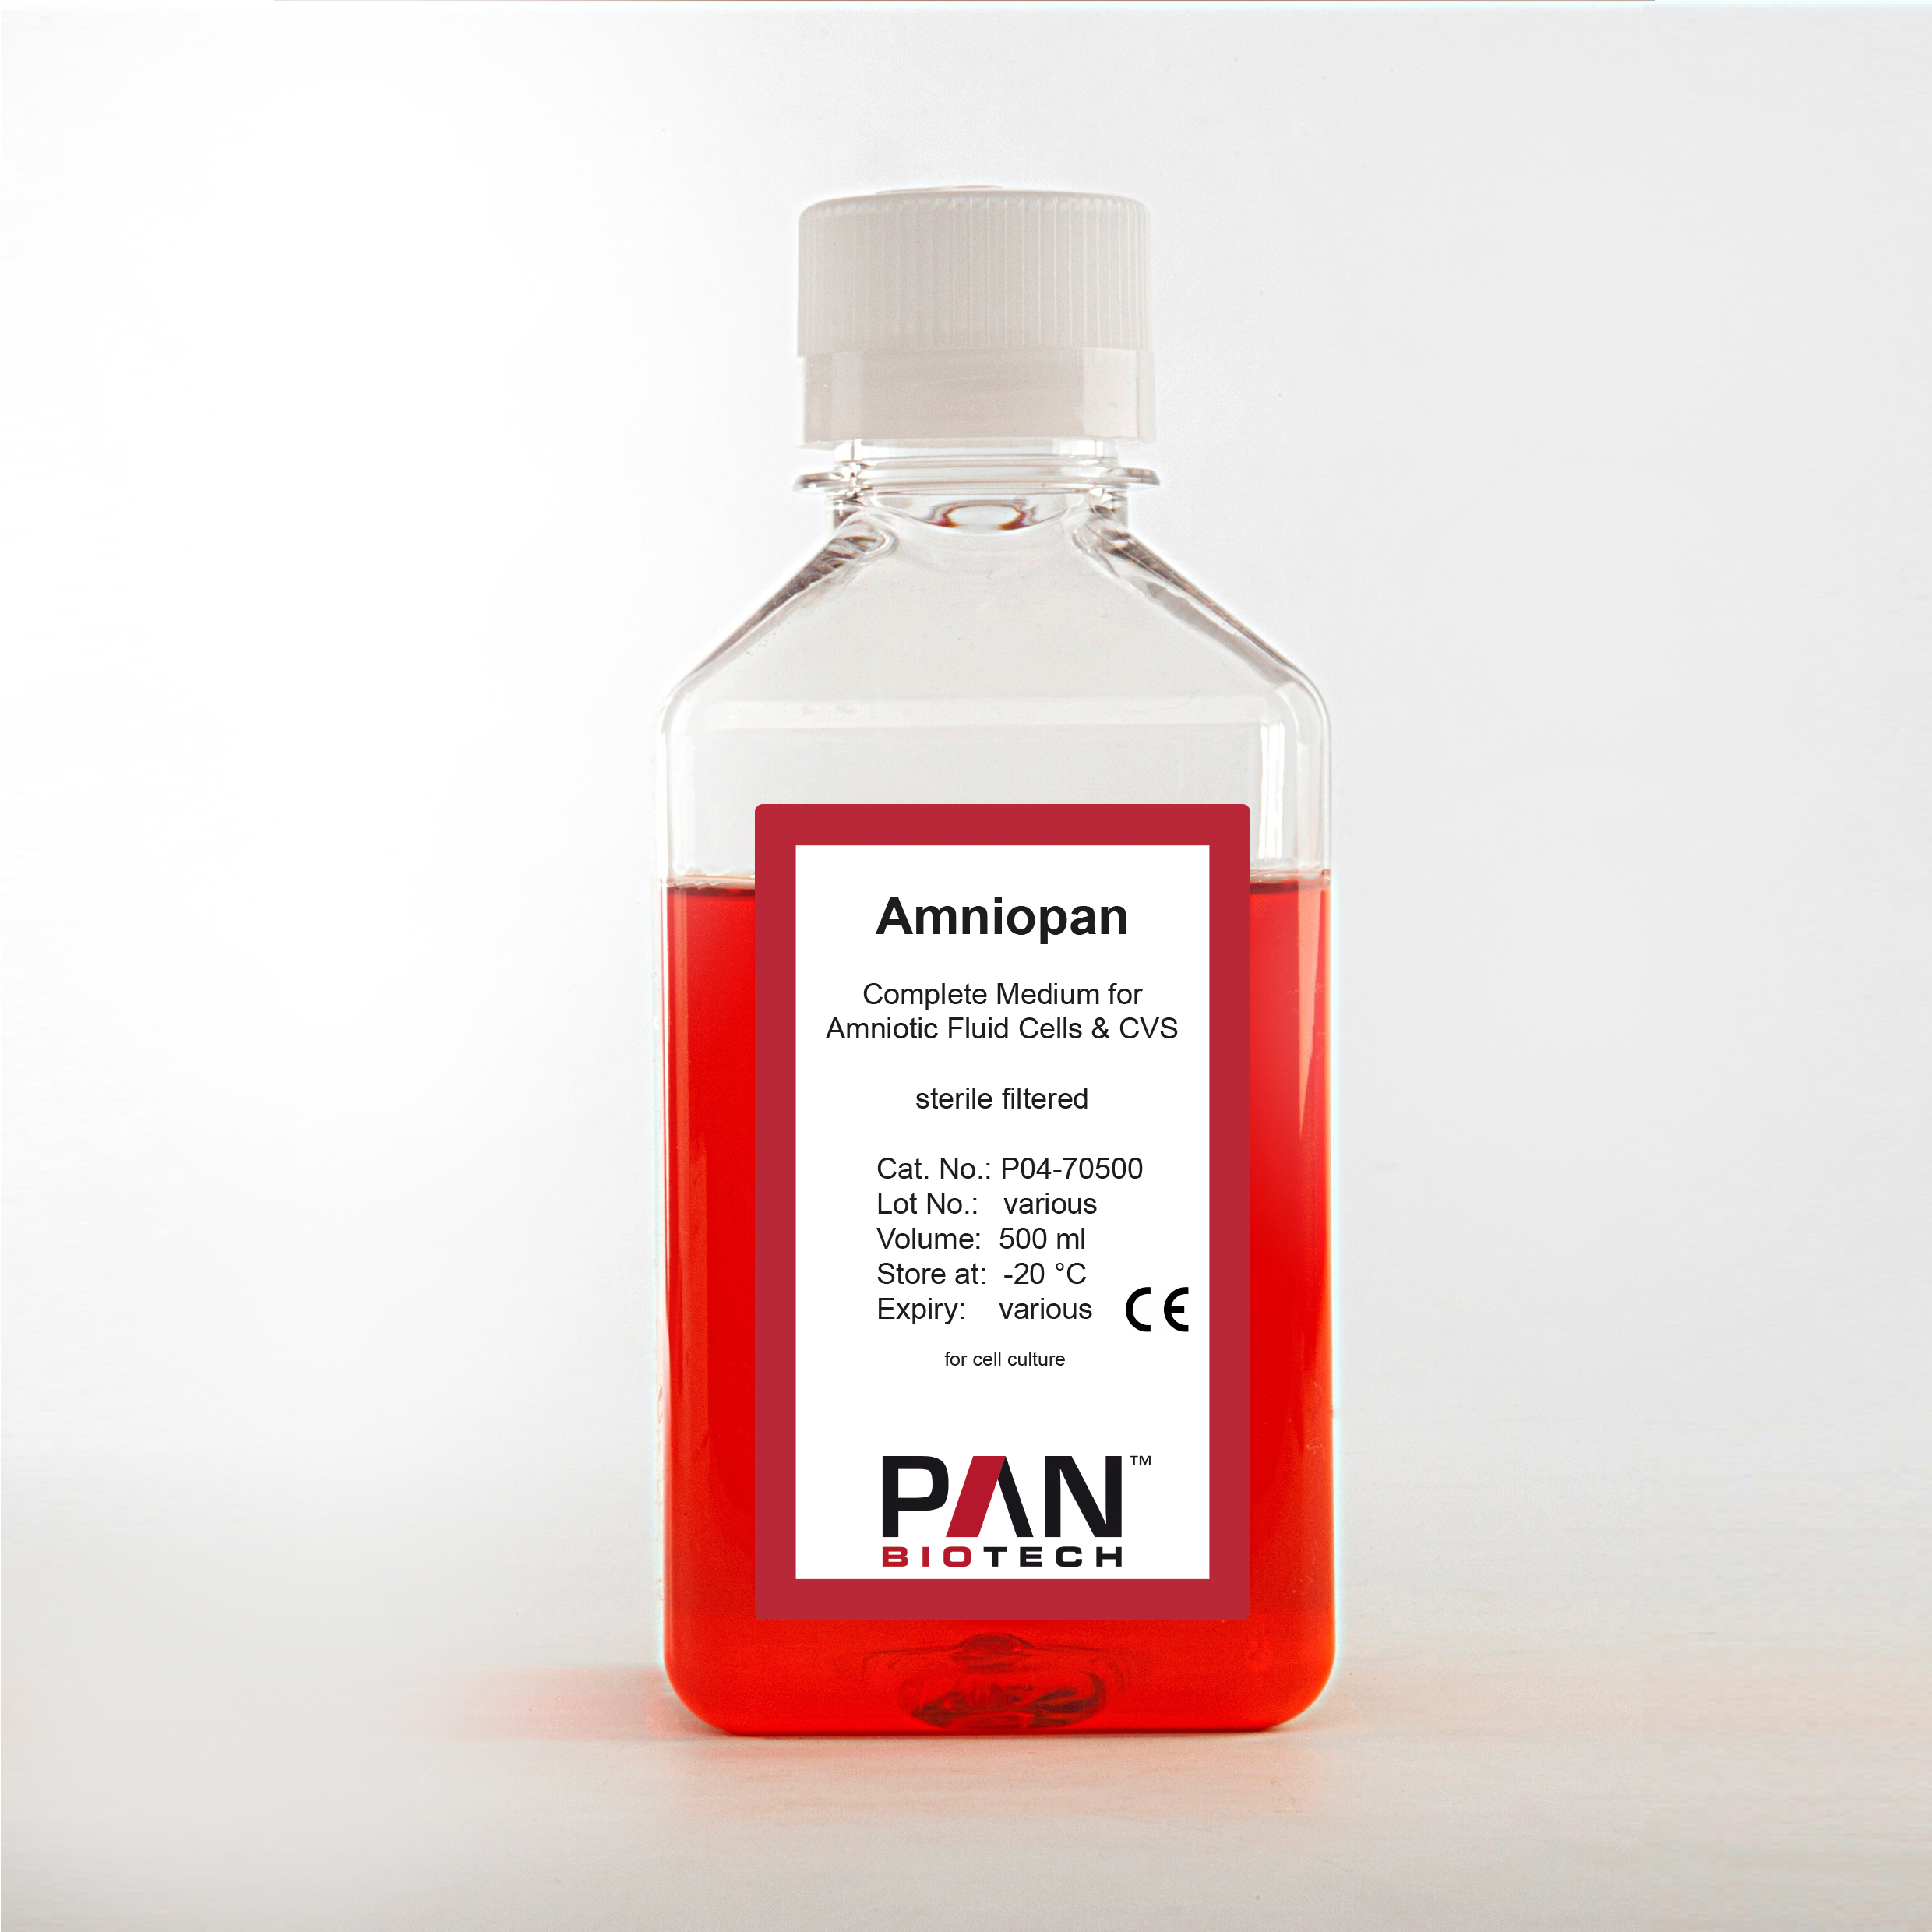 Amniopan, Complete Medium for Amniotic Fluid Cells & CVS